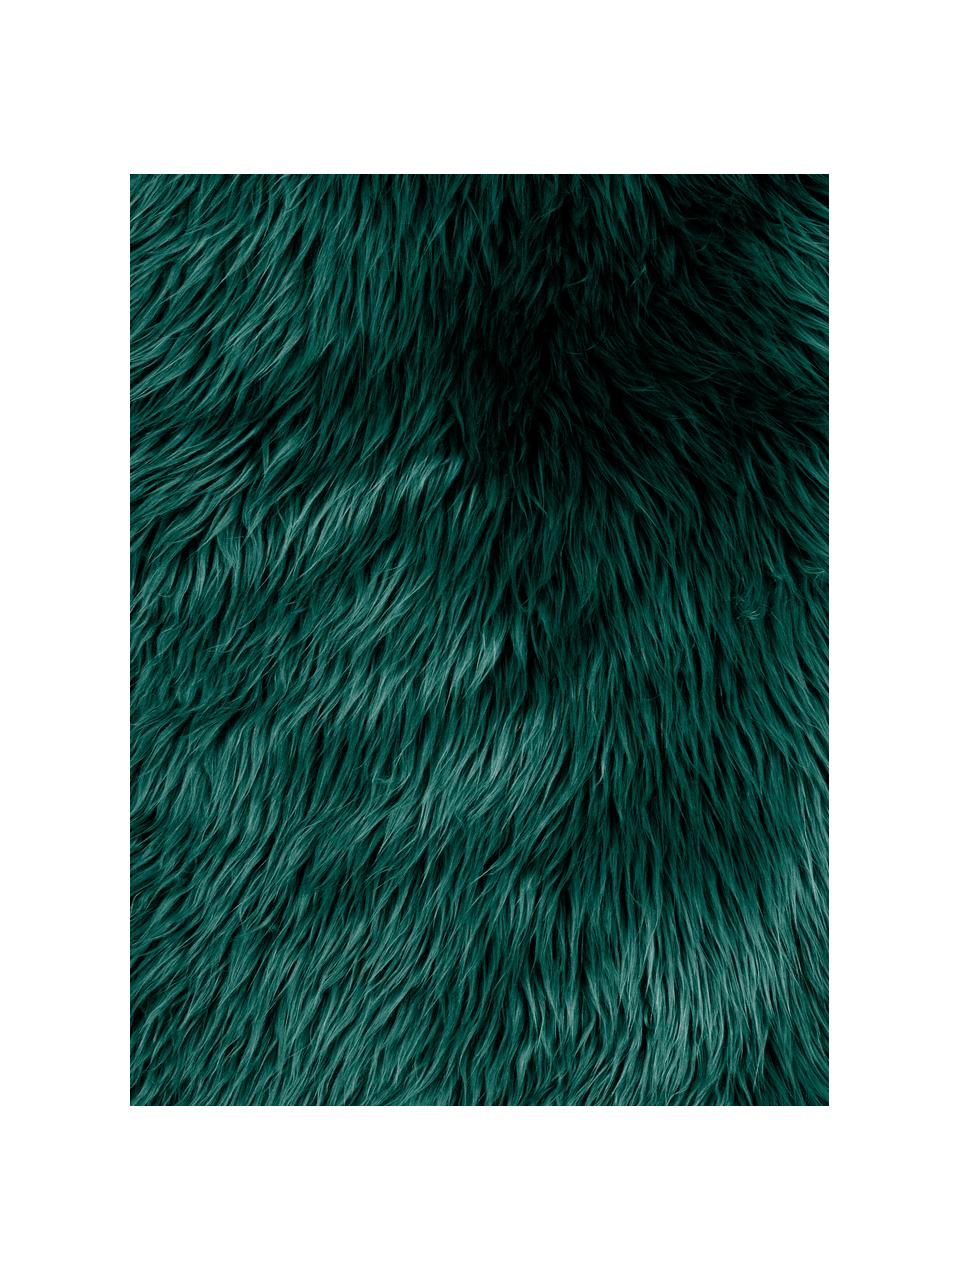 Sztuczne futro Vancouver, Ciemny zielony, S 60 x D 100 cm